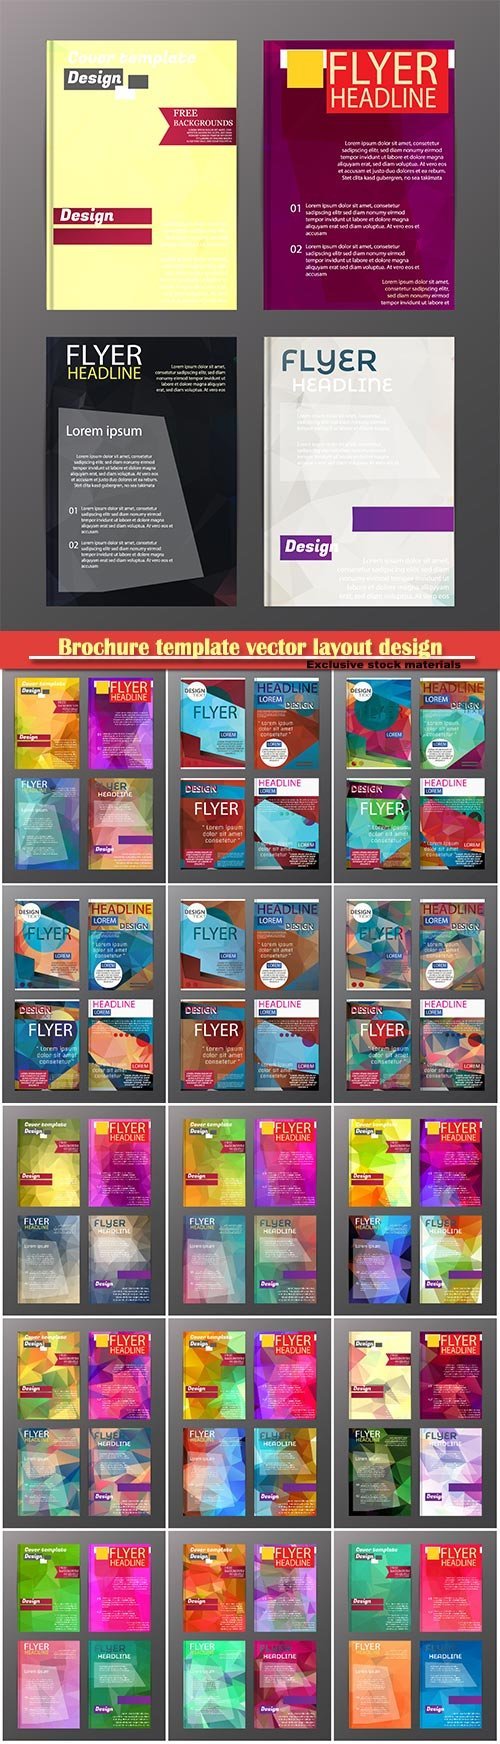 Download Brochure template vector layout design, corporate ...